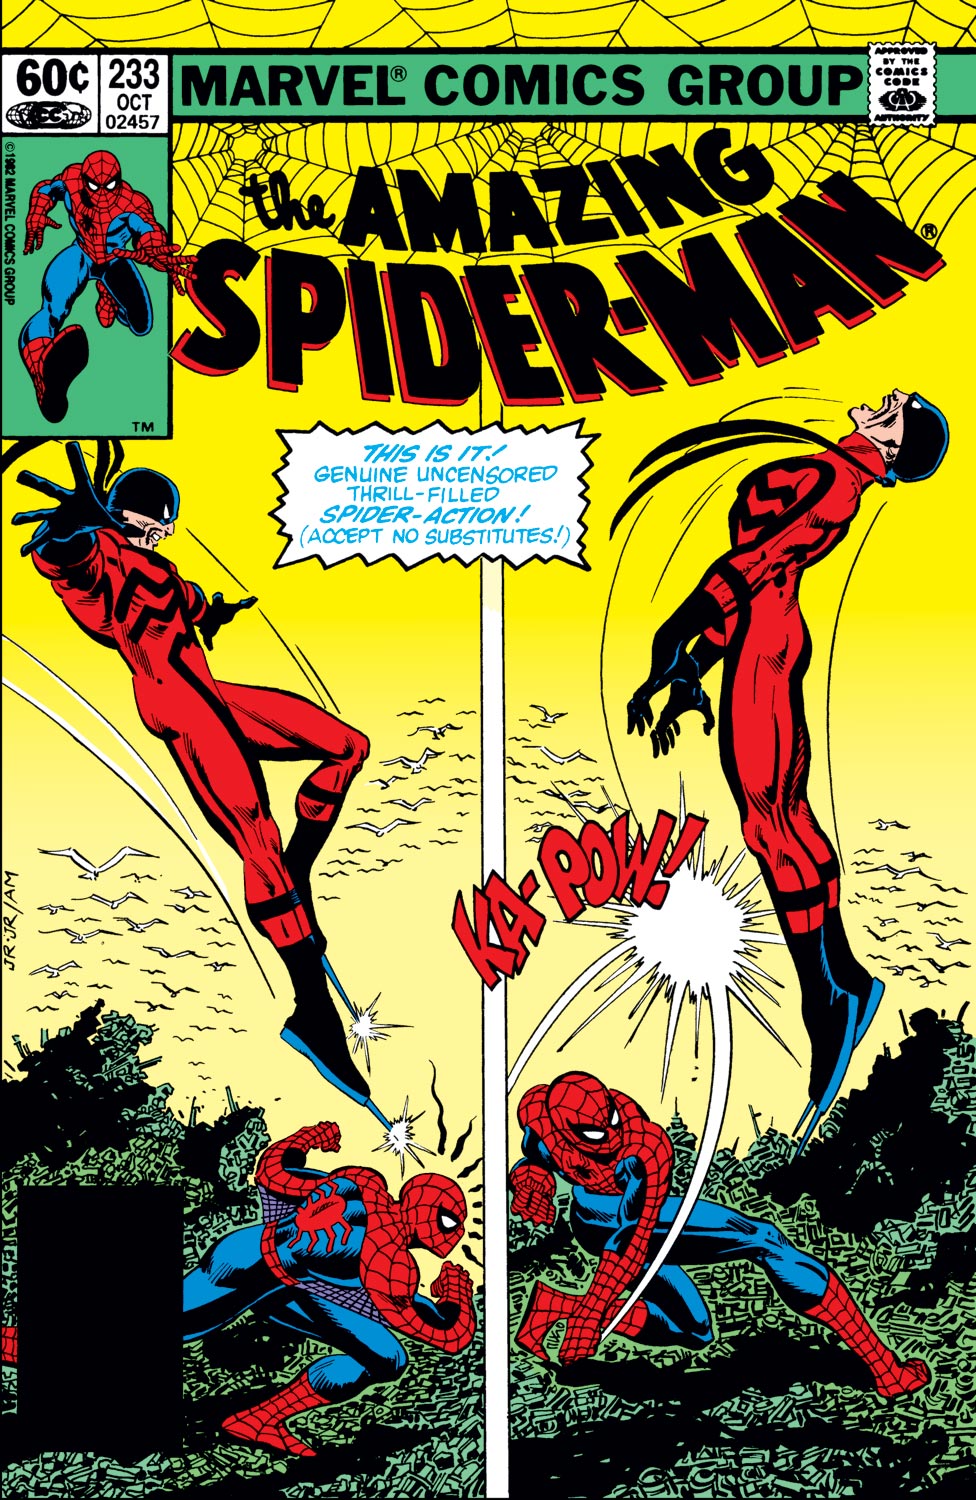 The Amazing Spider-Man (1963) #233